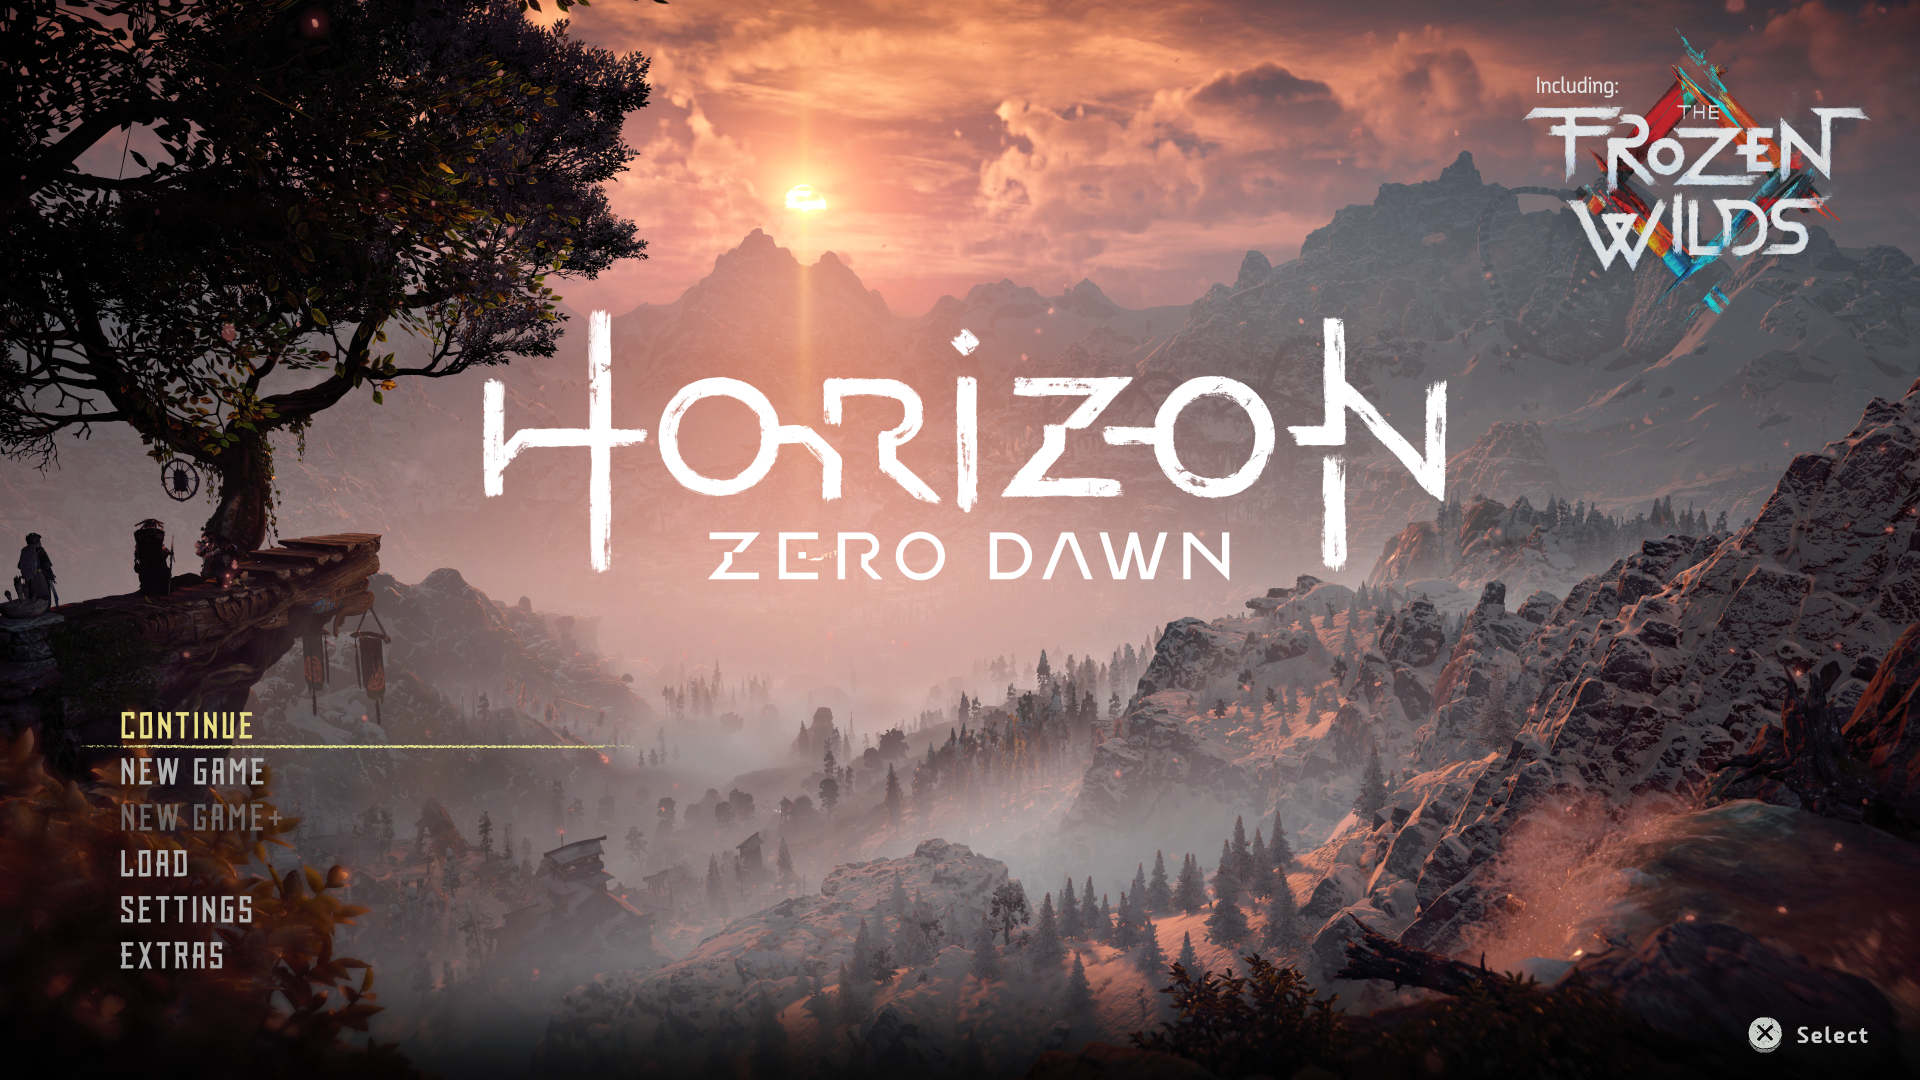 Horizon Zero Dawn: The Frozen Wilds - PS4 Games